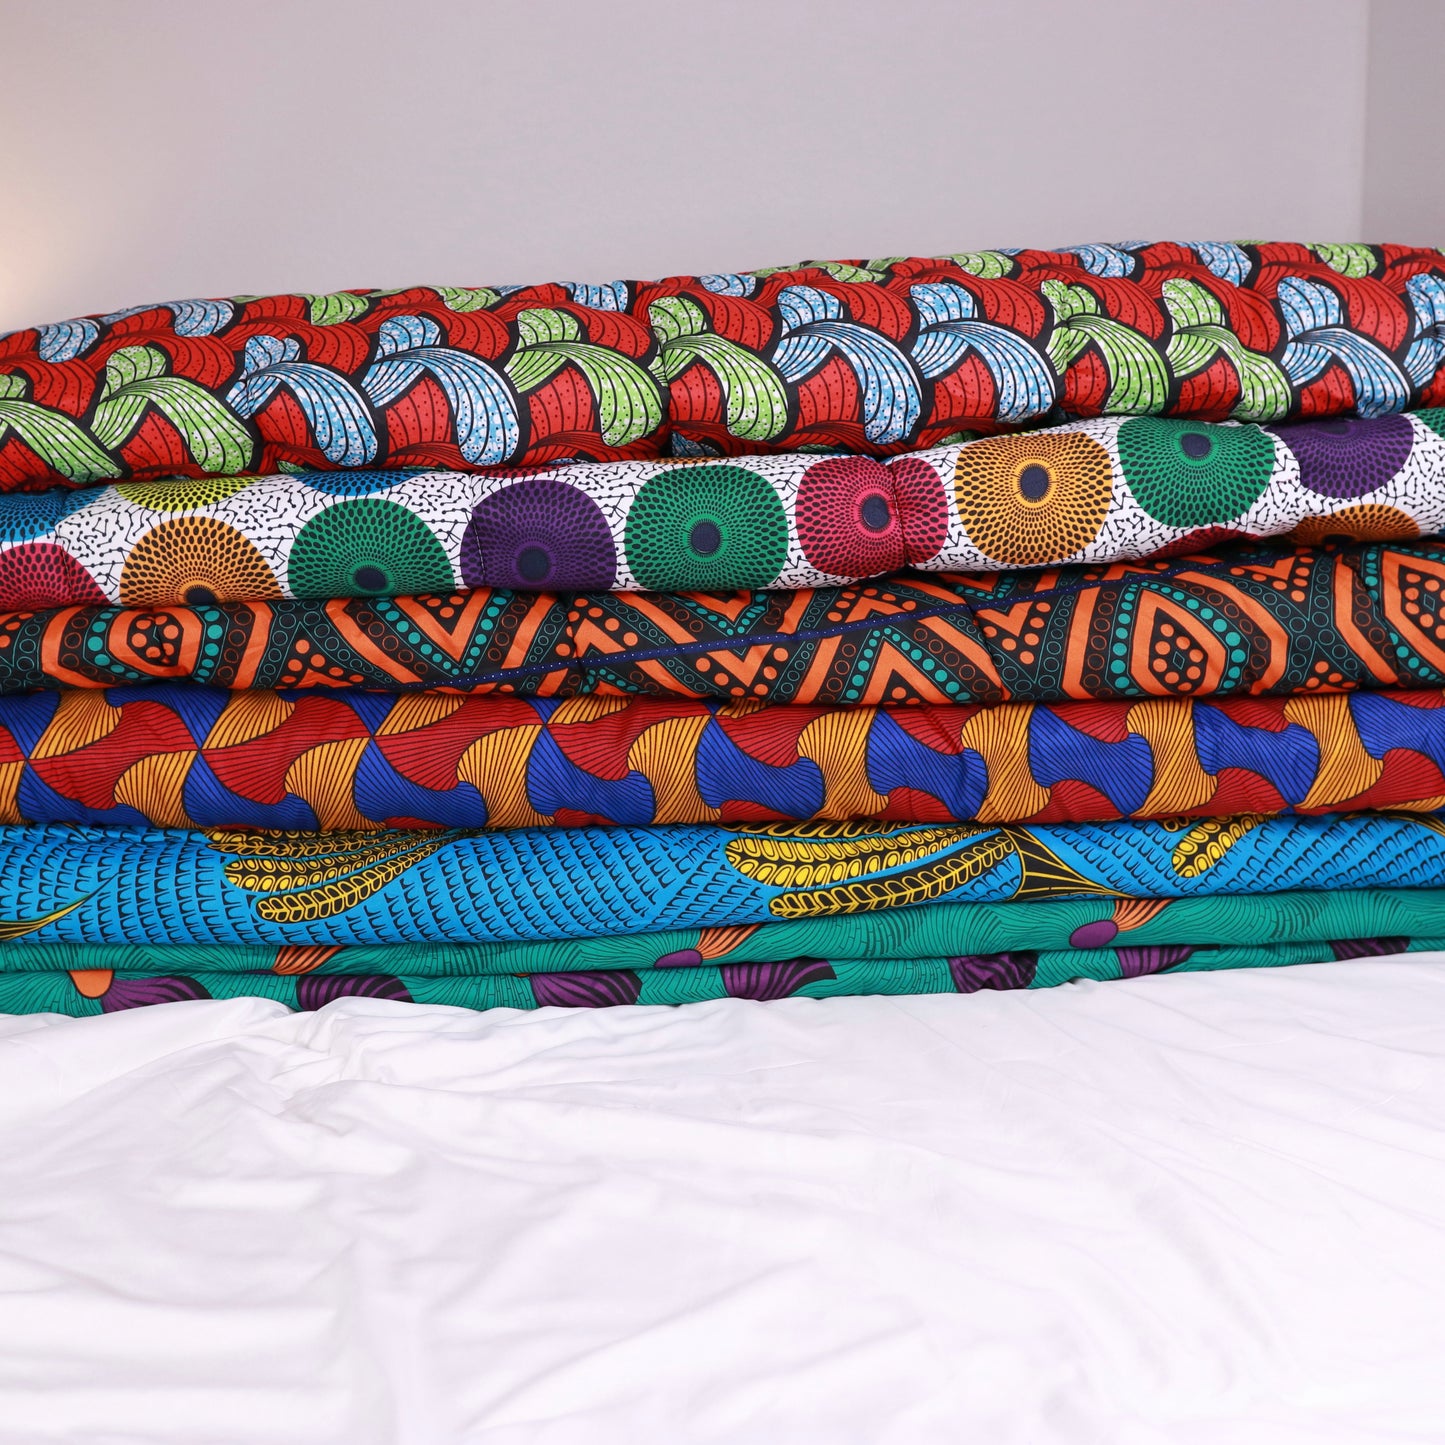 Botswana | Luxury African Print Ankara Goose Down Alternative 100% Cotton Comforter